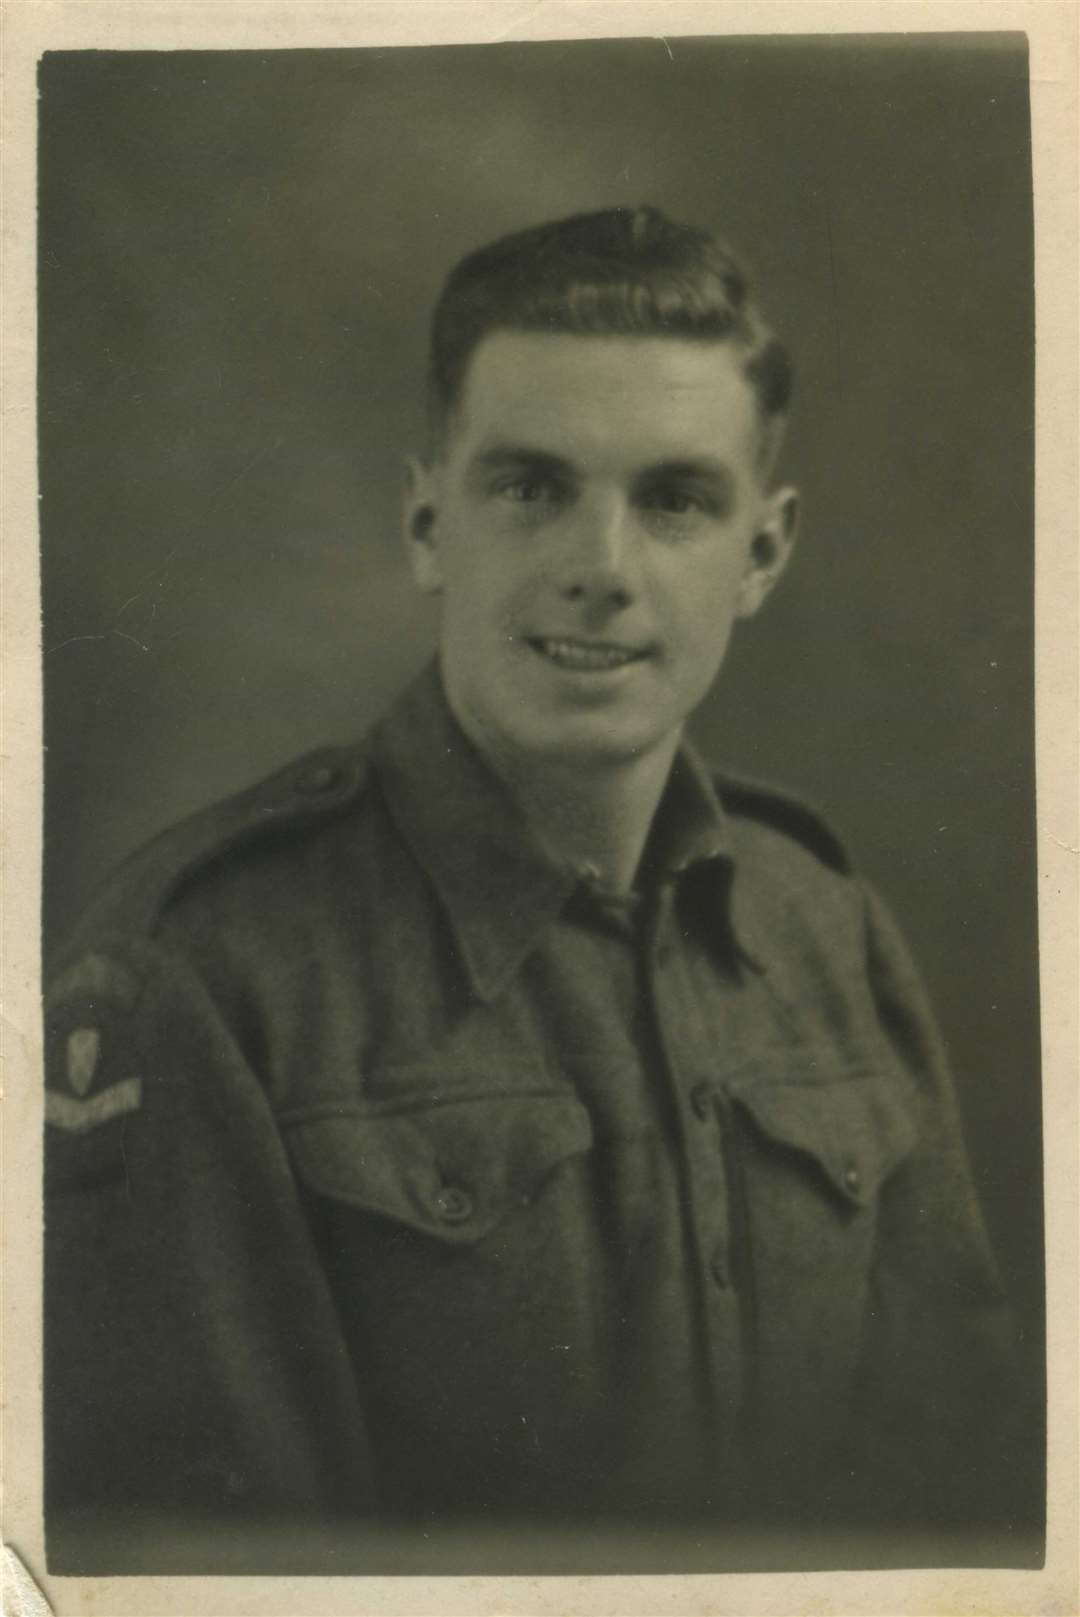 Charlie Pallett as a young serviceman